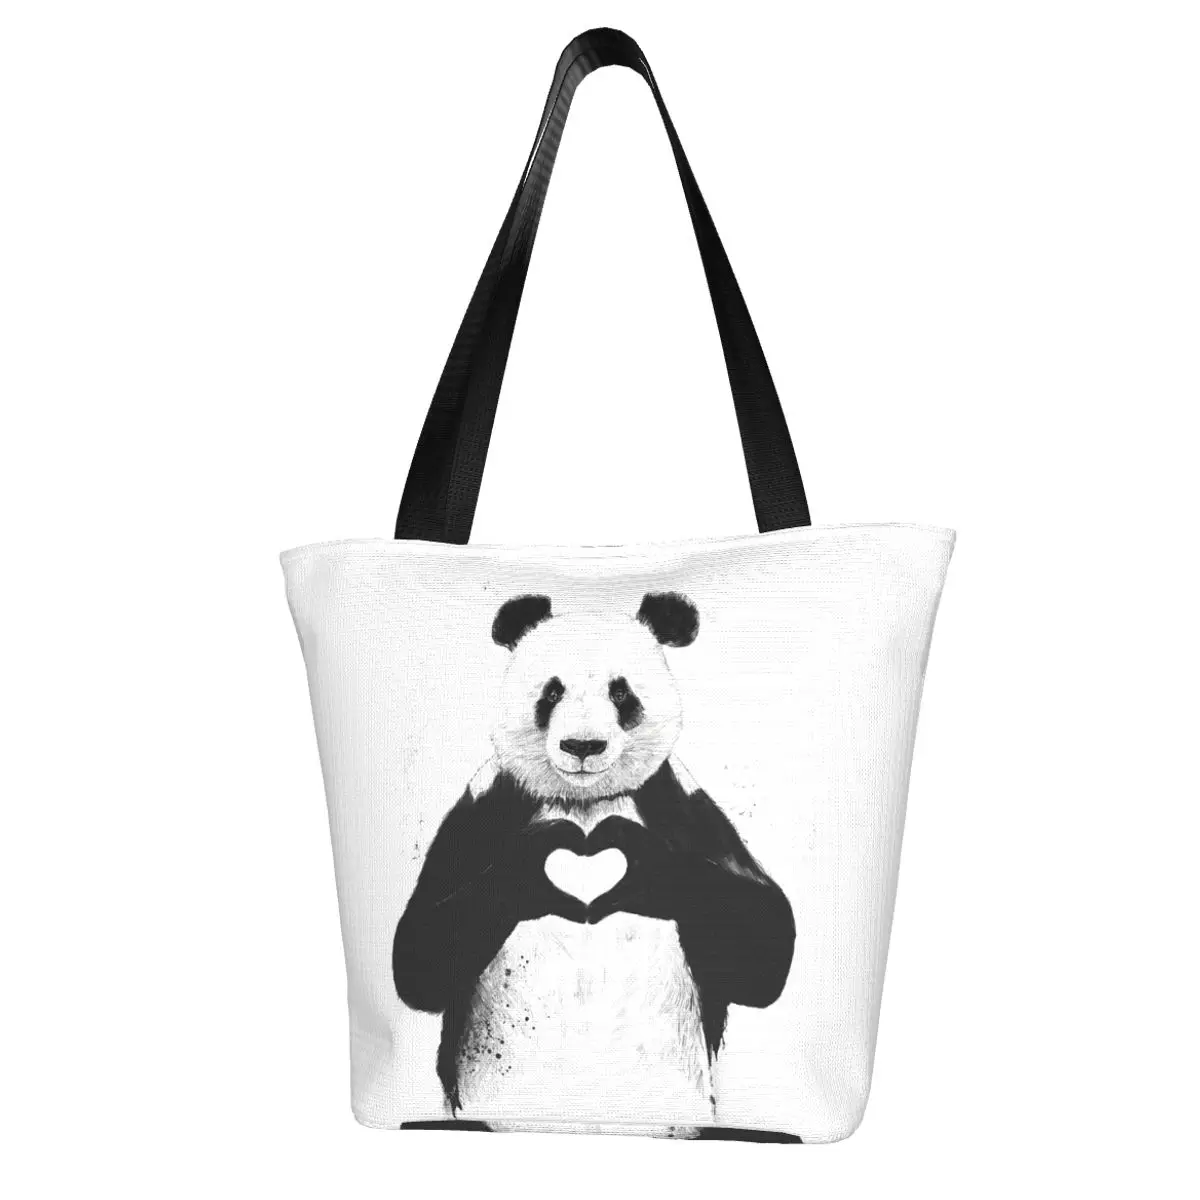 Panda Shopping Bag Aesthetic Cloth Outdoor Handbag Female Fashion Bags